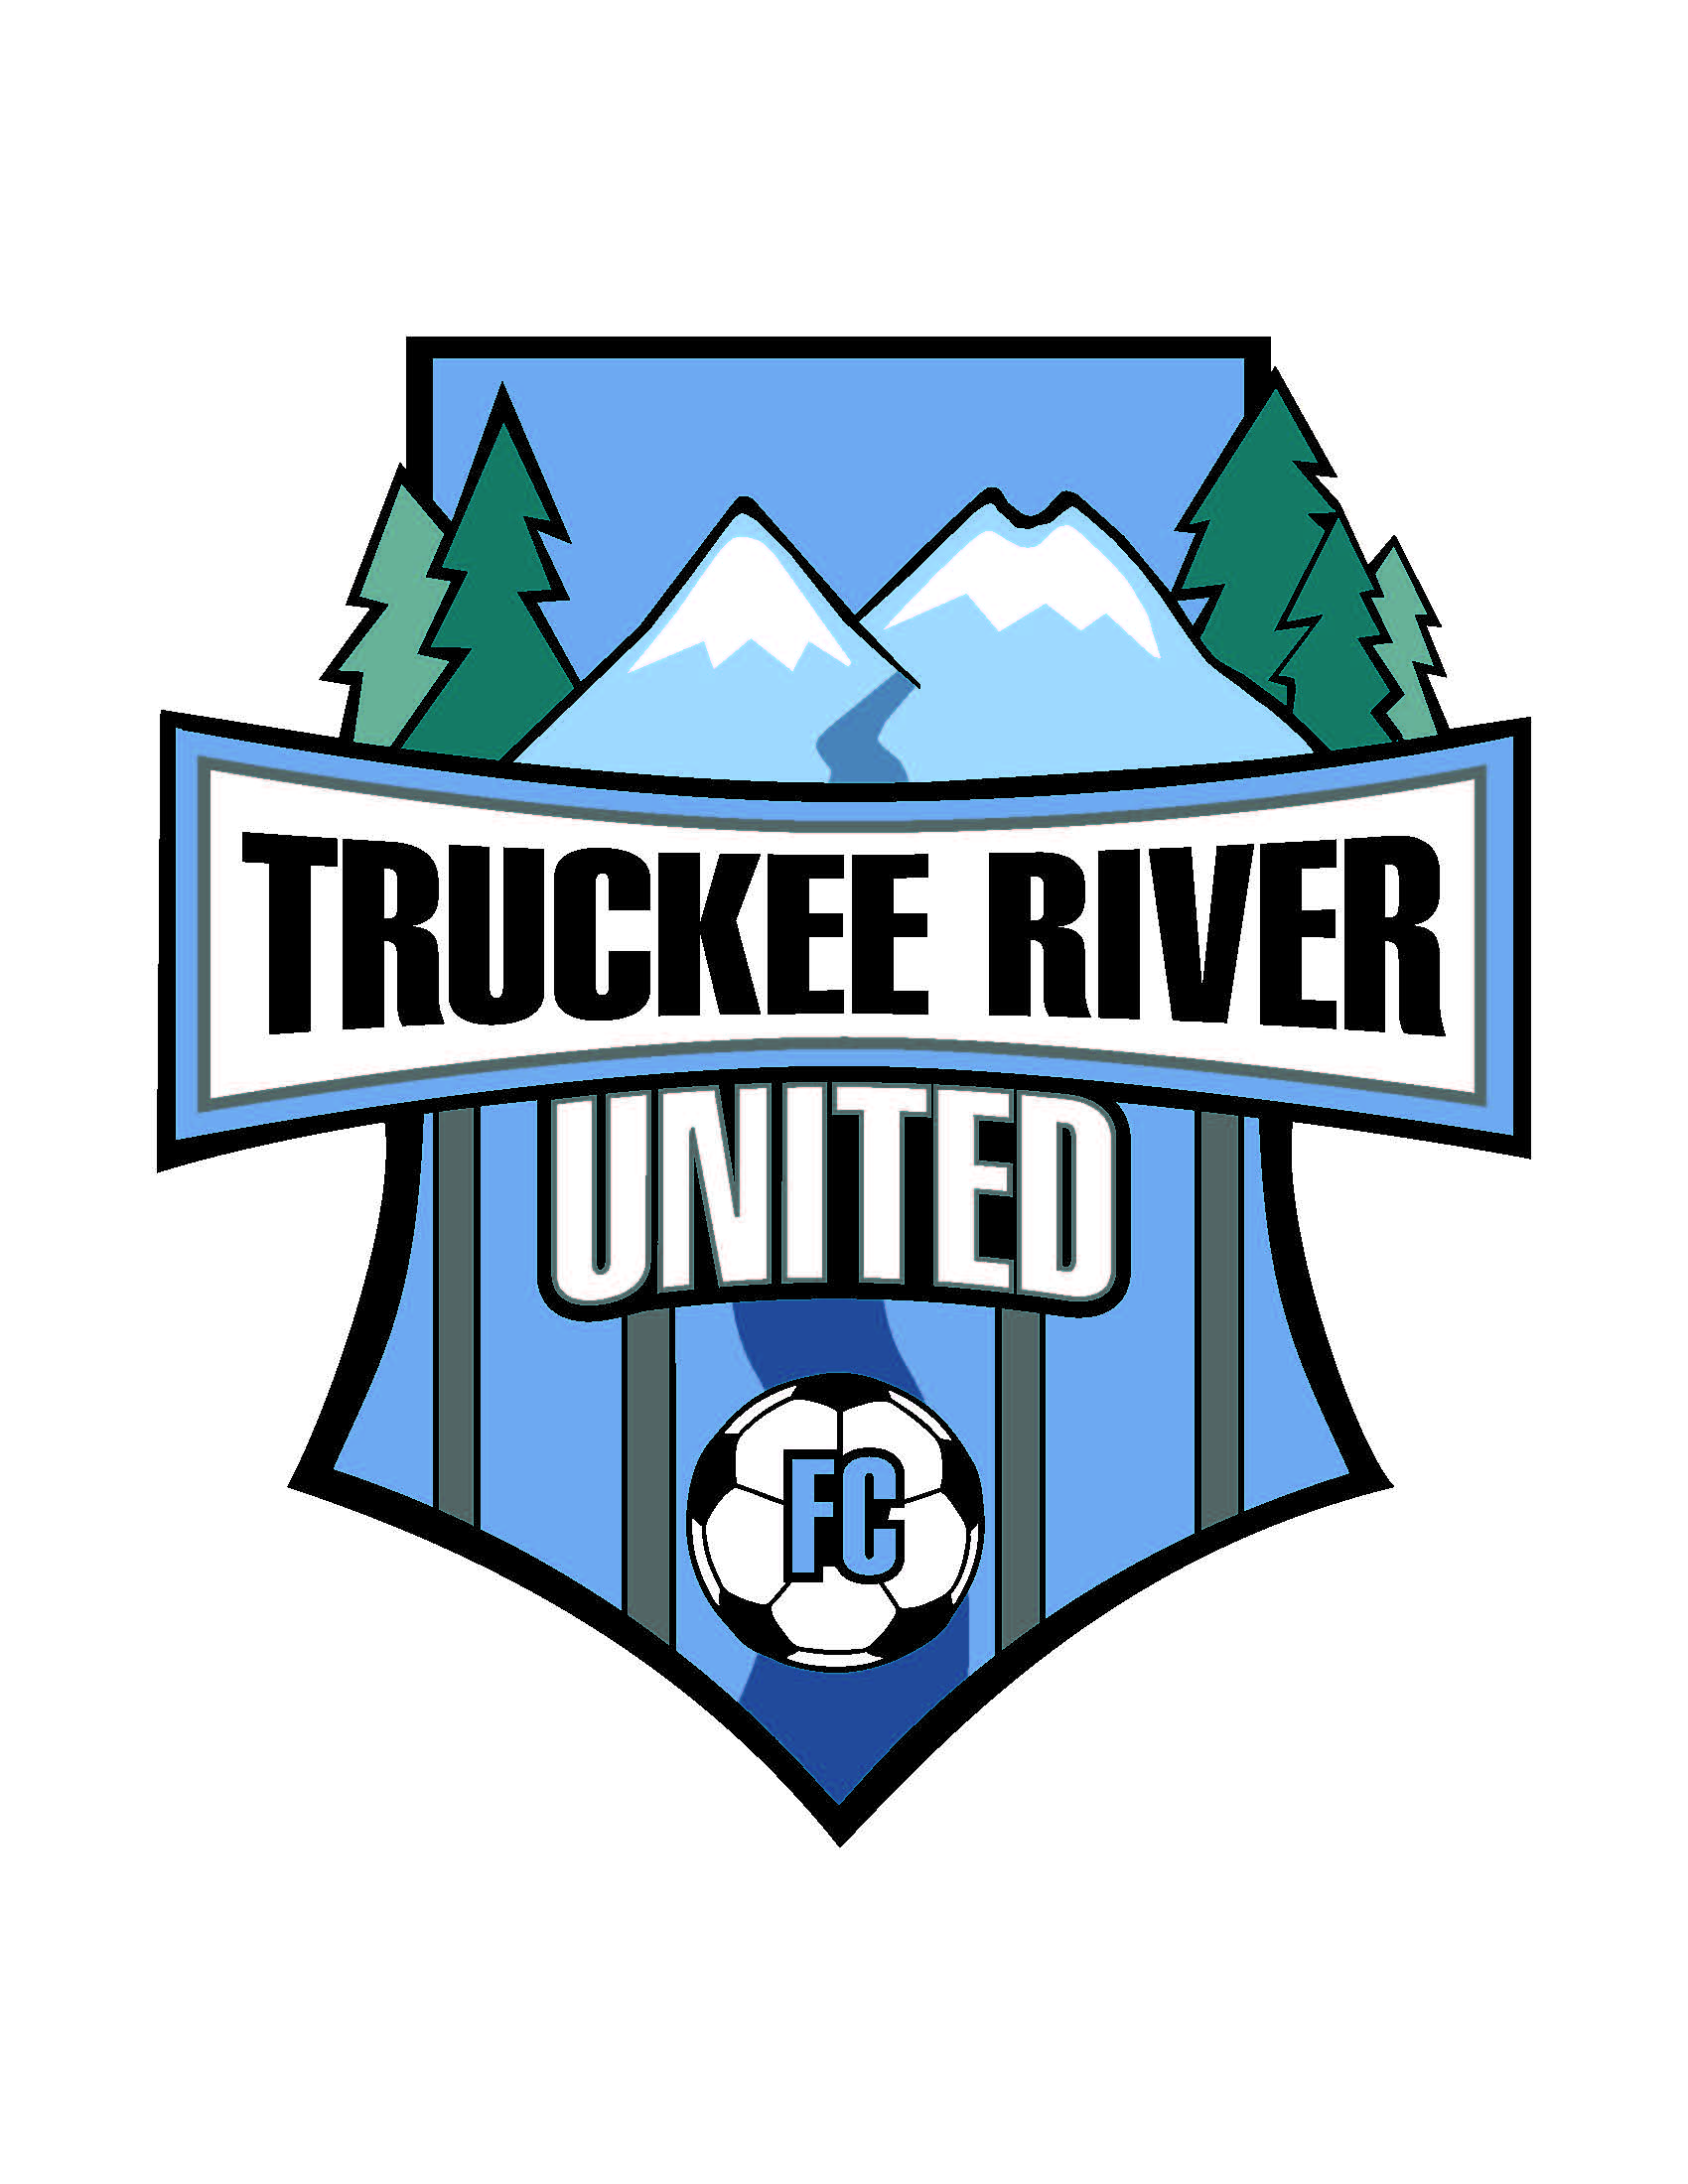 TRUCKEE RIVER UNITED FC team badge